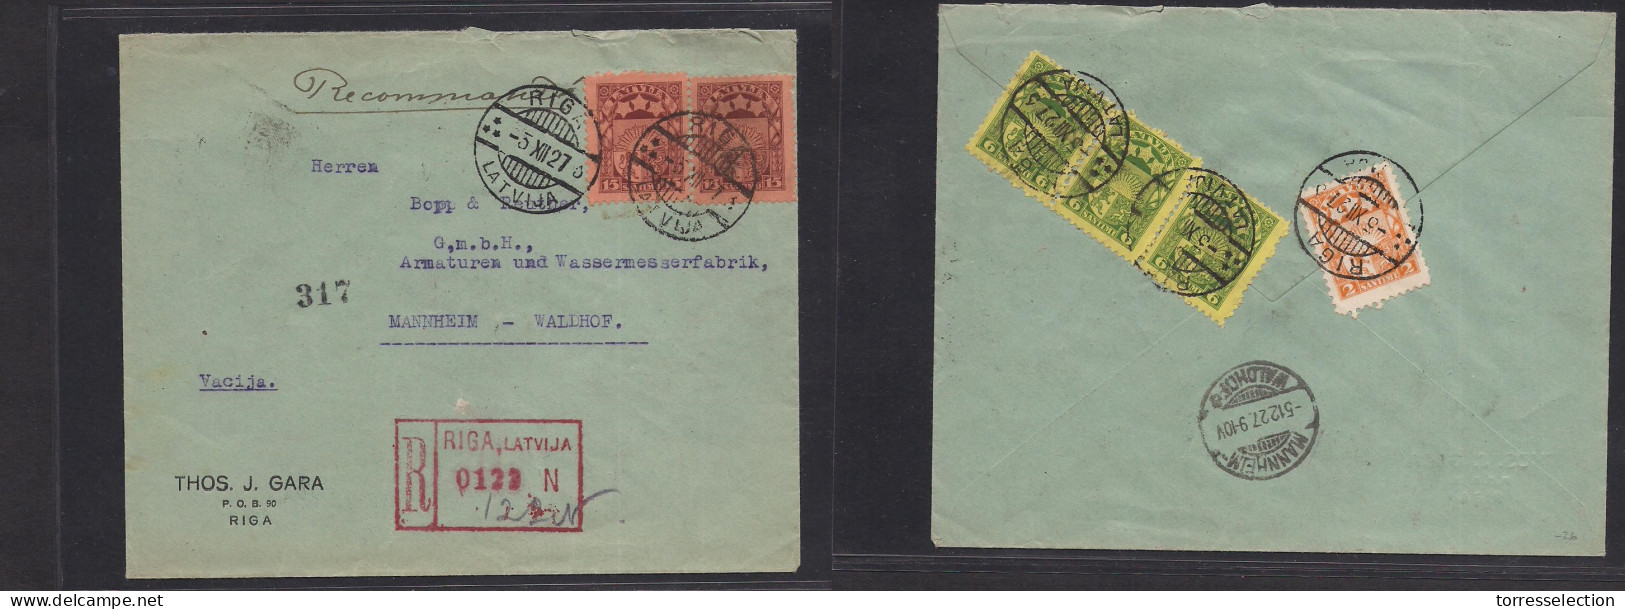 LATVIA. 1927 (3 Dec) Riga - Germany, Mannheim (5 Dec) Registered Front + Reverse Envelope. VF. XSALE. - Lettland